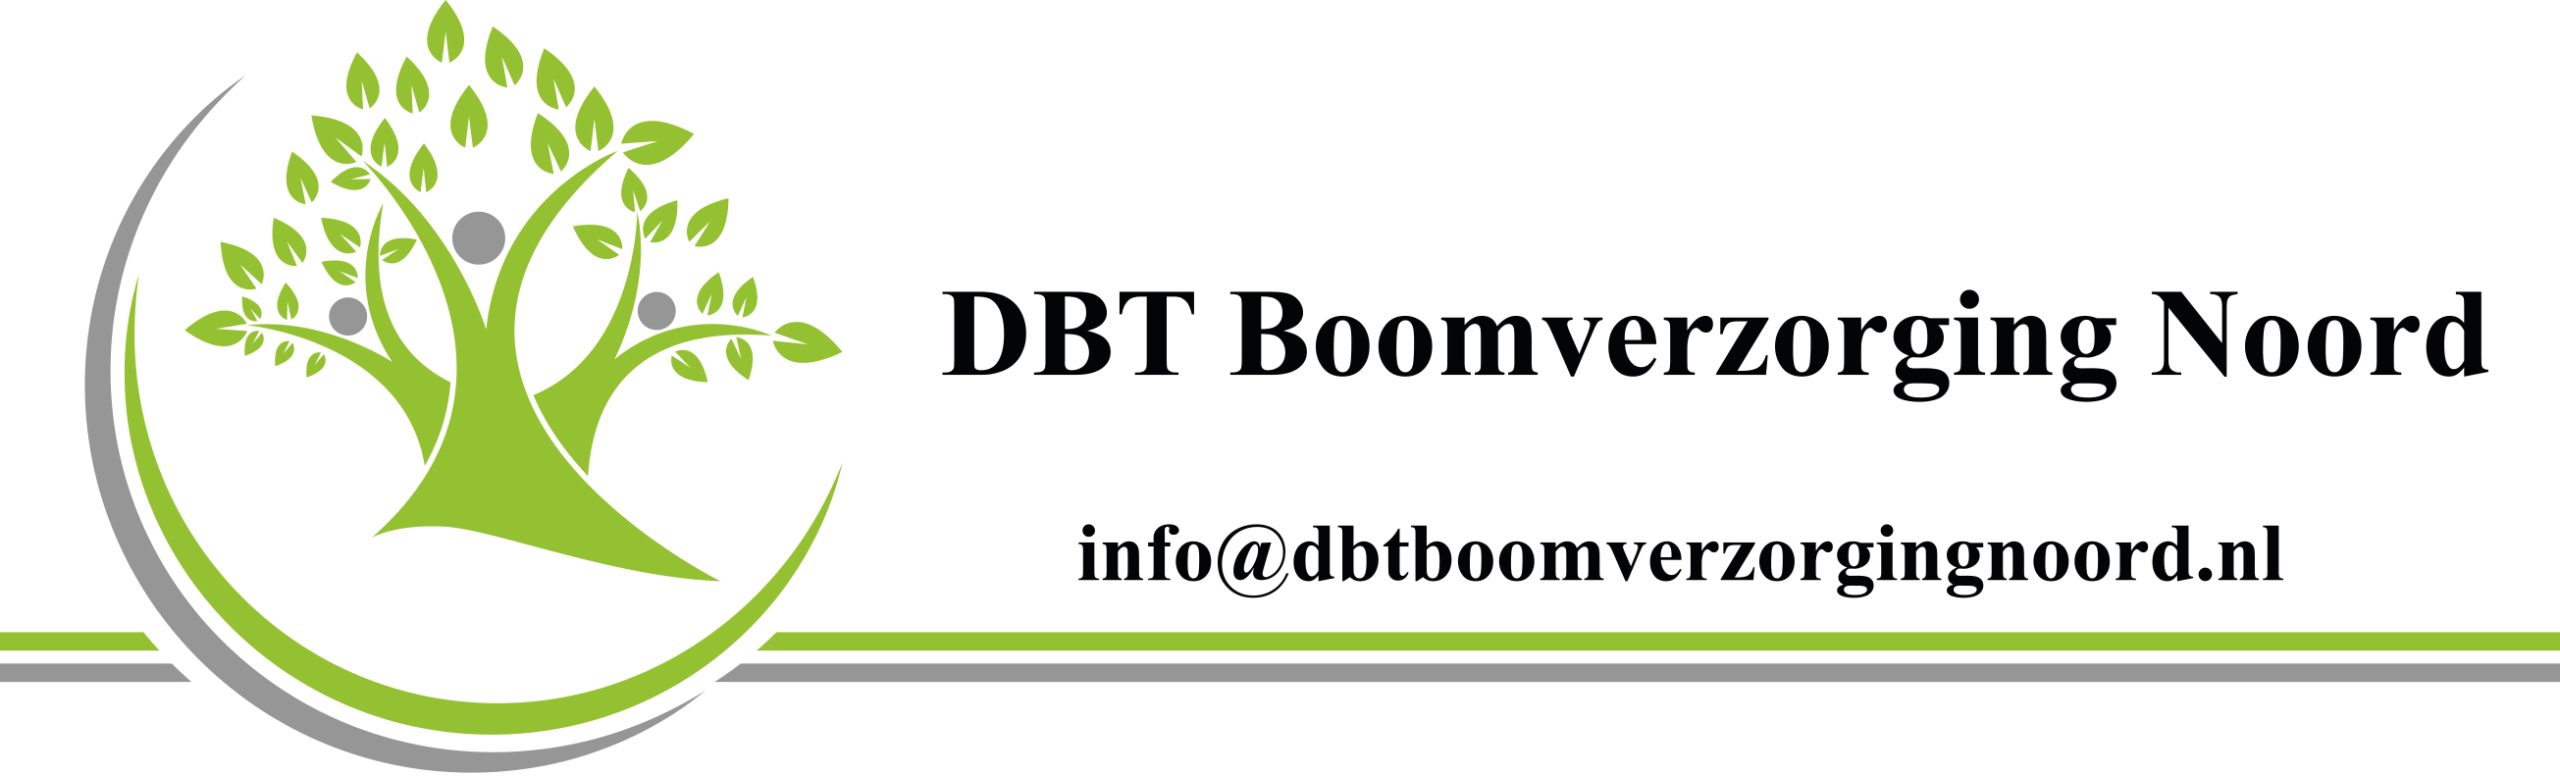 DBT Boomverzorging Noord